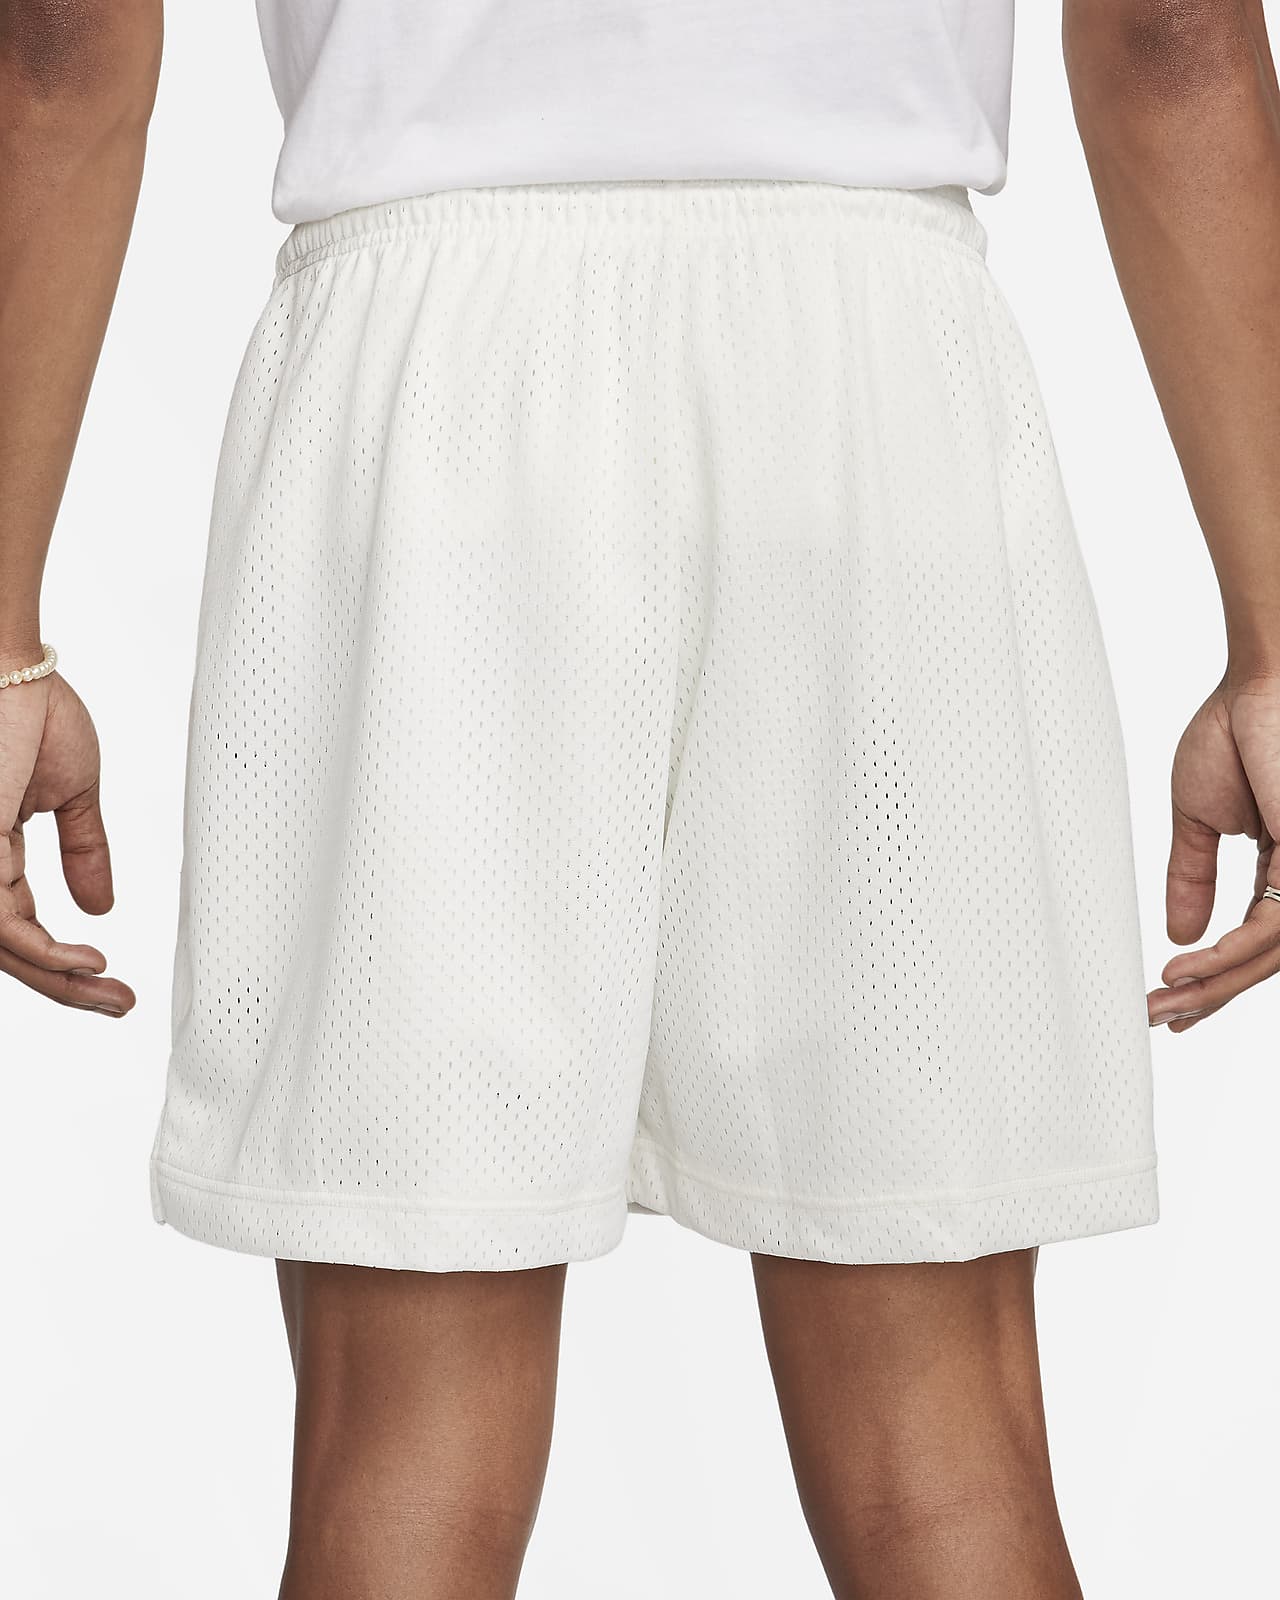 Nike Authentics Men's Mesh Shorts.